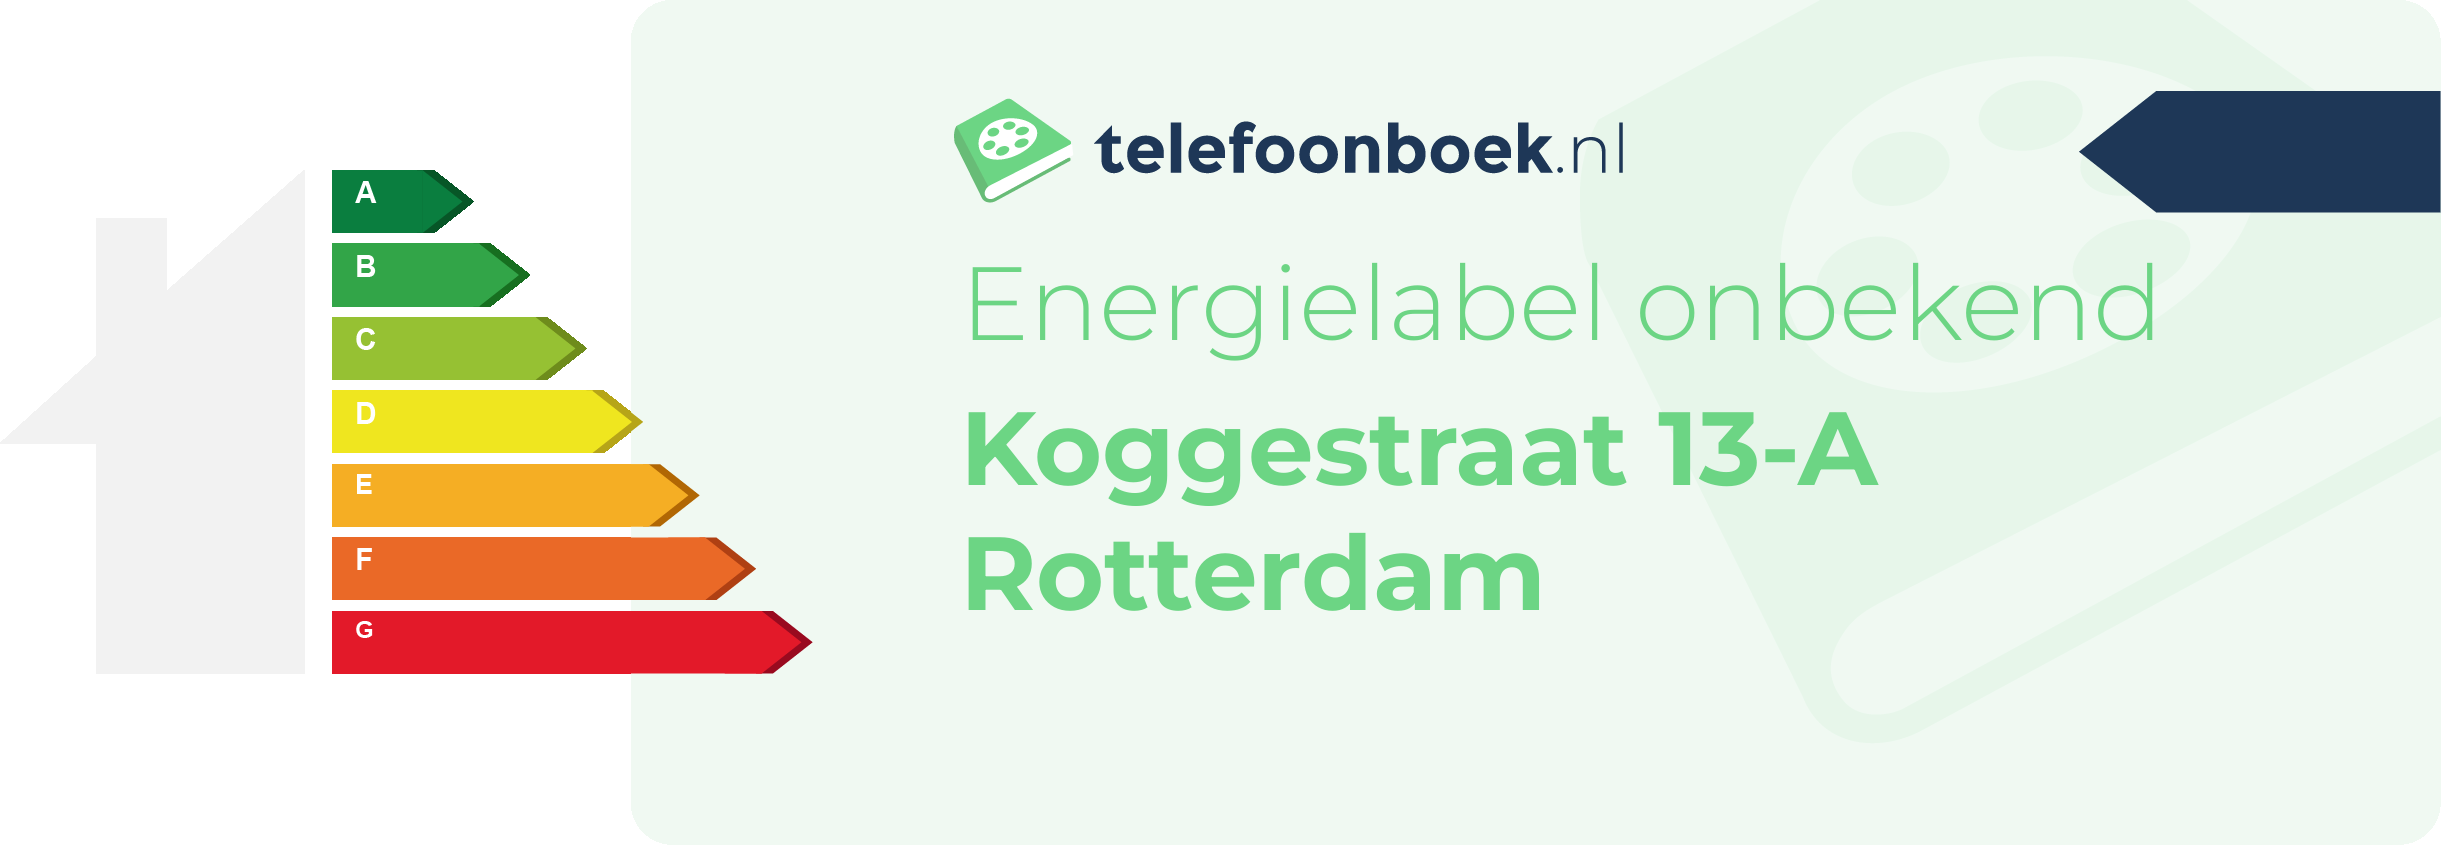 Energielabel Koggestraat 13-A Rotterdam